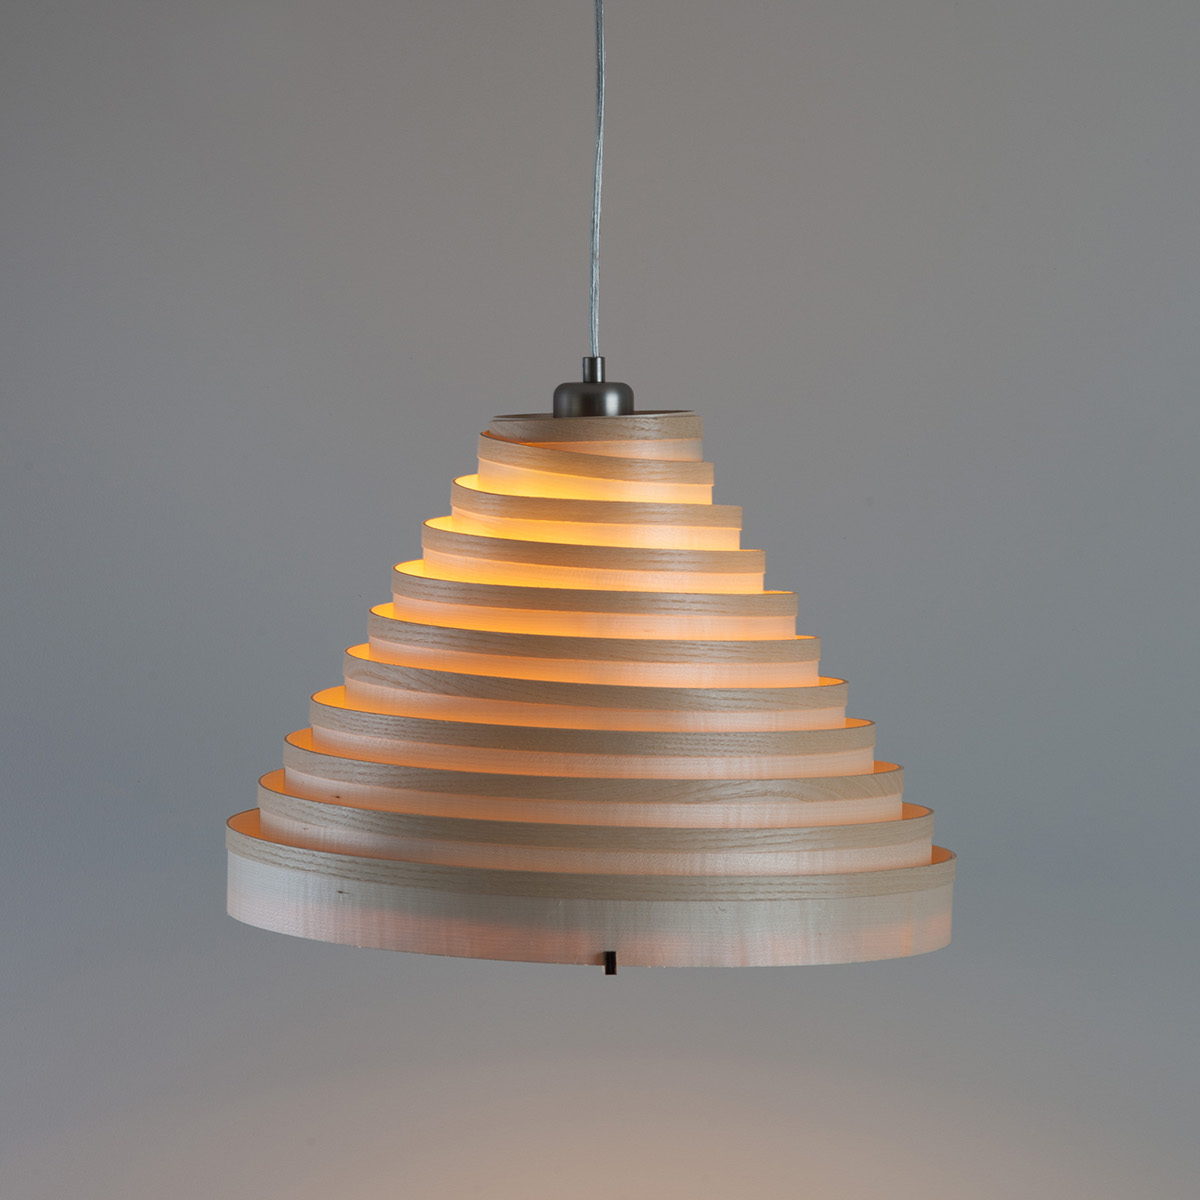 Hive Light Tom Raffield Wooden Lighting Feature light